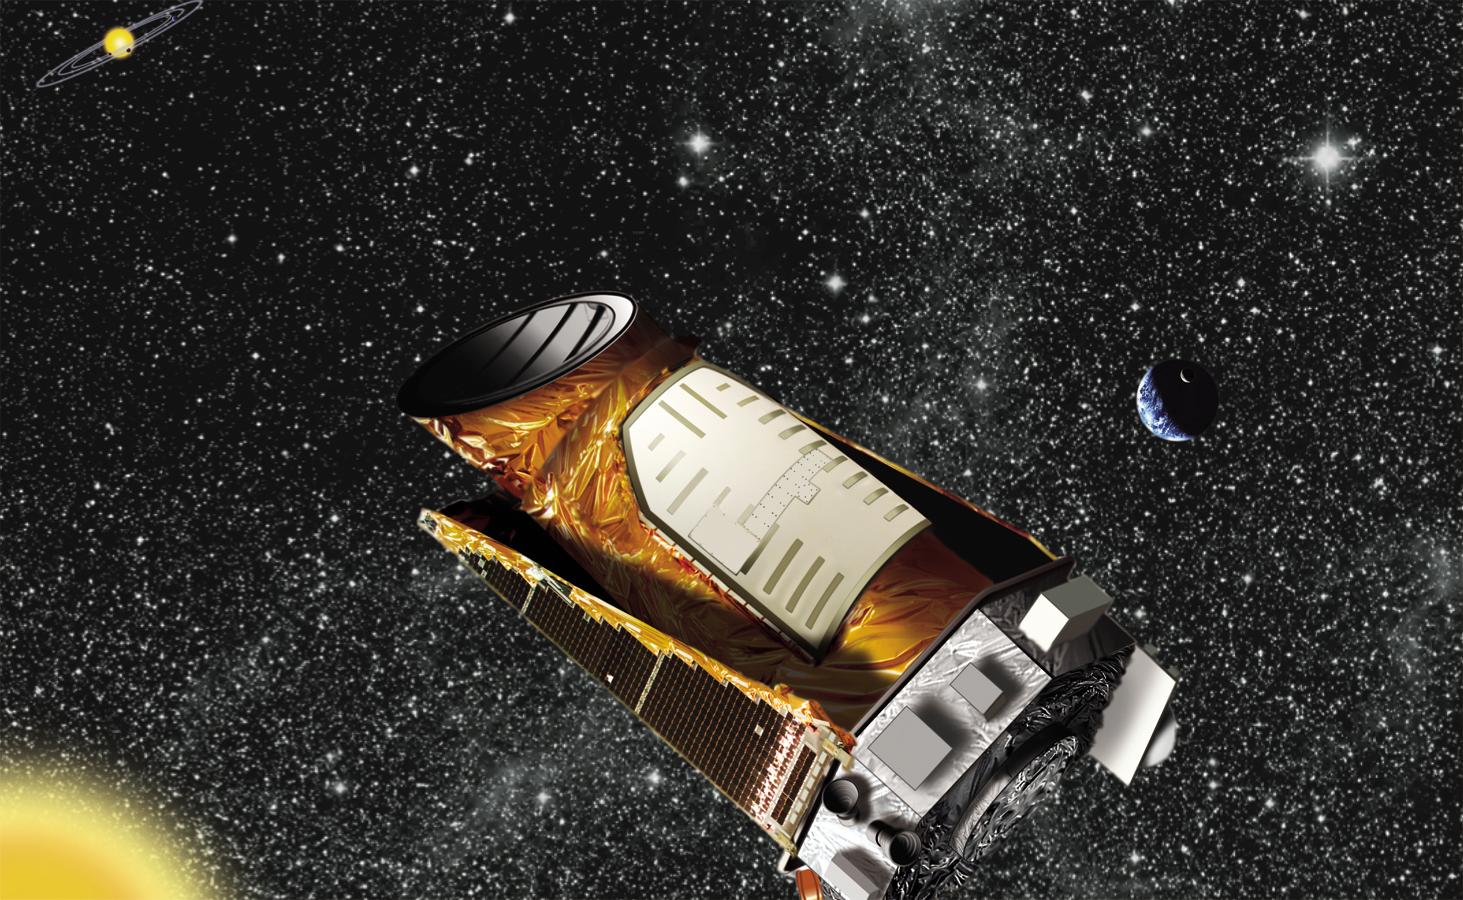 NASA image Kepler Space Telescope Exoplanet posted on AmericaSpace